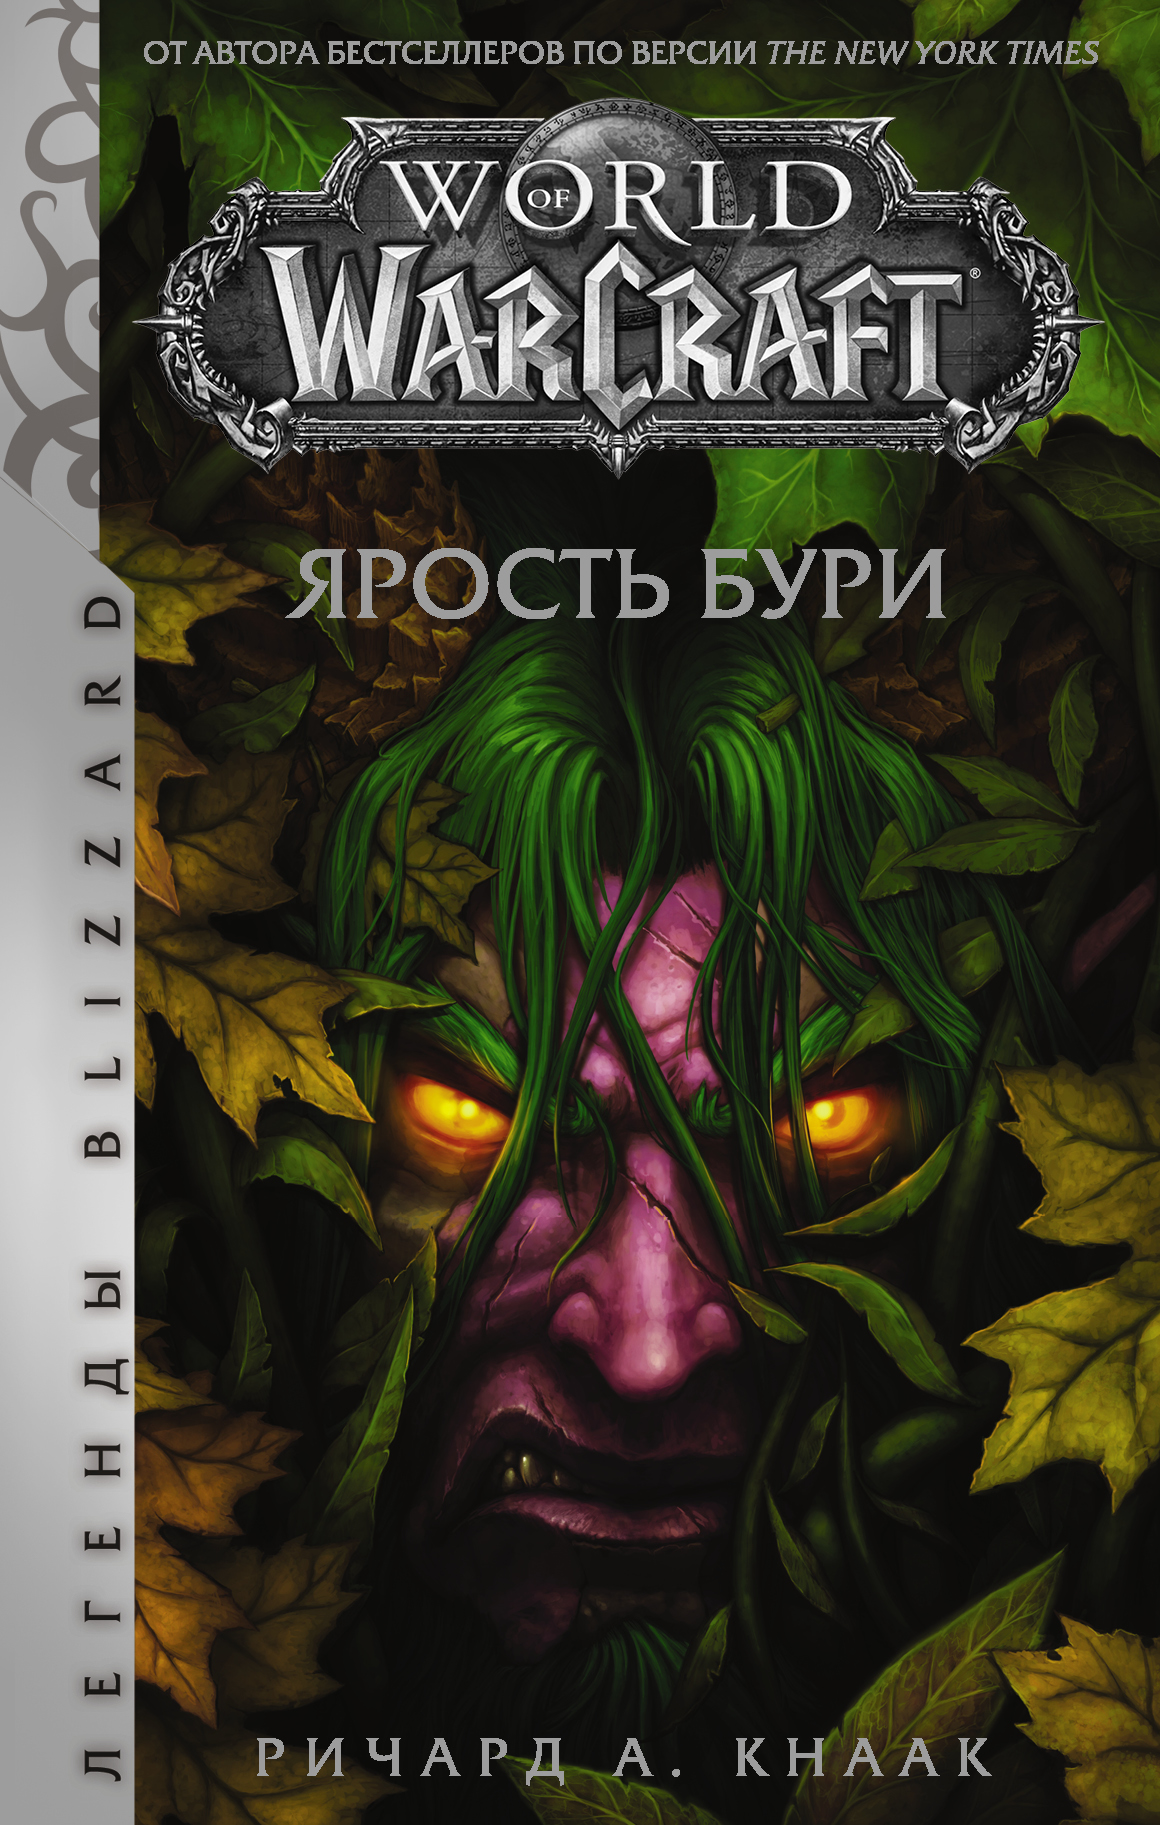 байерс ричард ли ярость роман Кнаак Ричард World of Warcraft: Ярость Бури